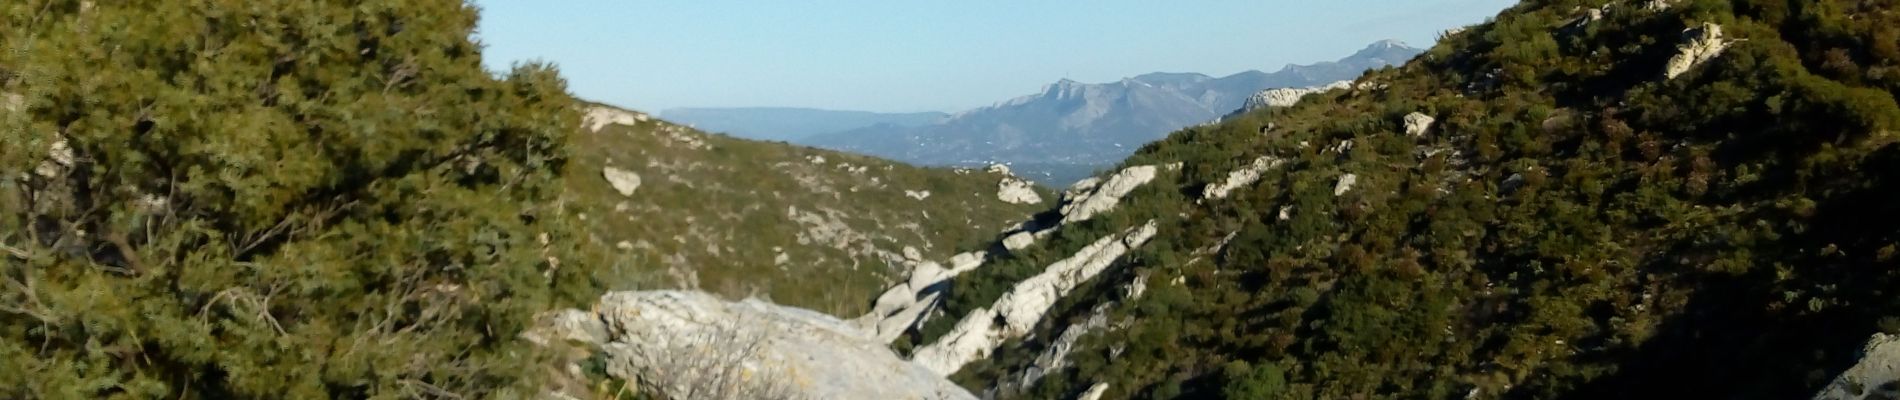 Tour Mountainbike Marseille - vallon de la barrasse - Photo